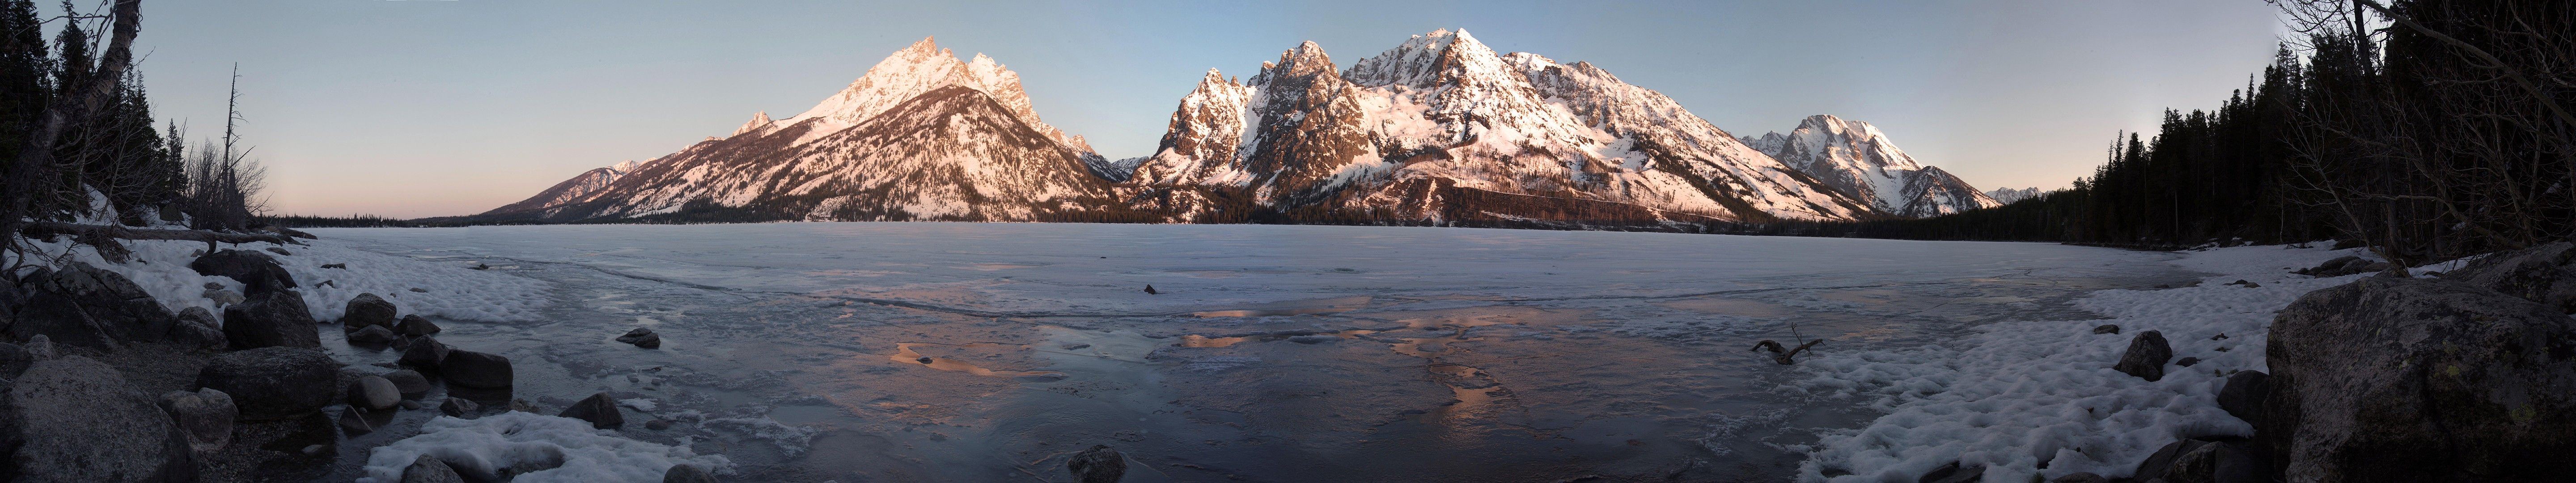 landscape, #mountains, #lake, #ice, #snow, #winter, #triple screen